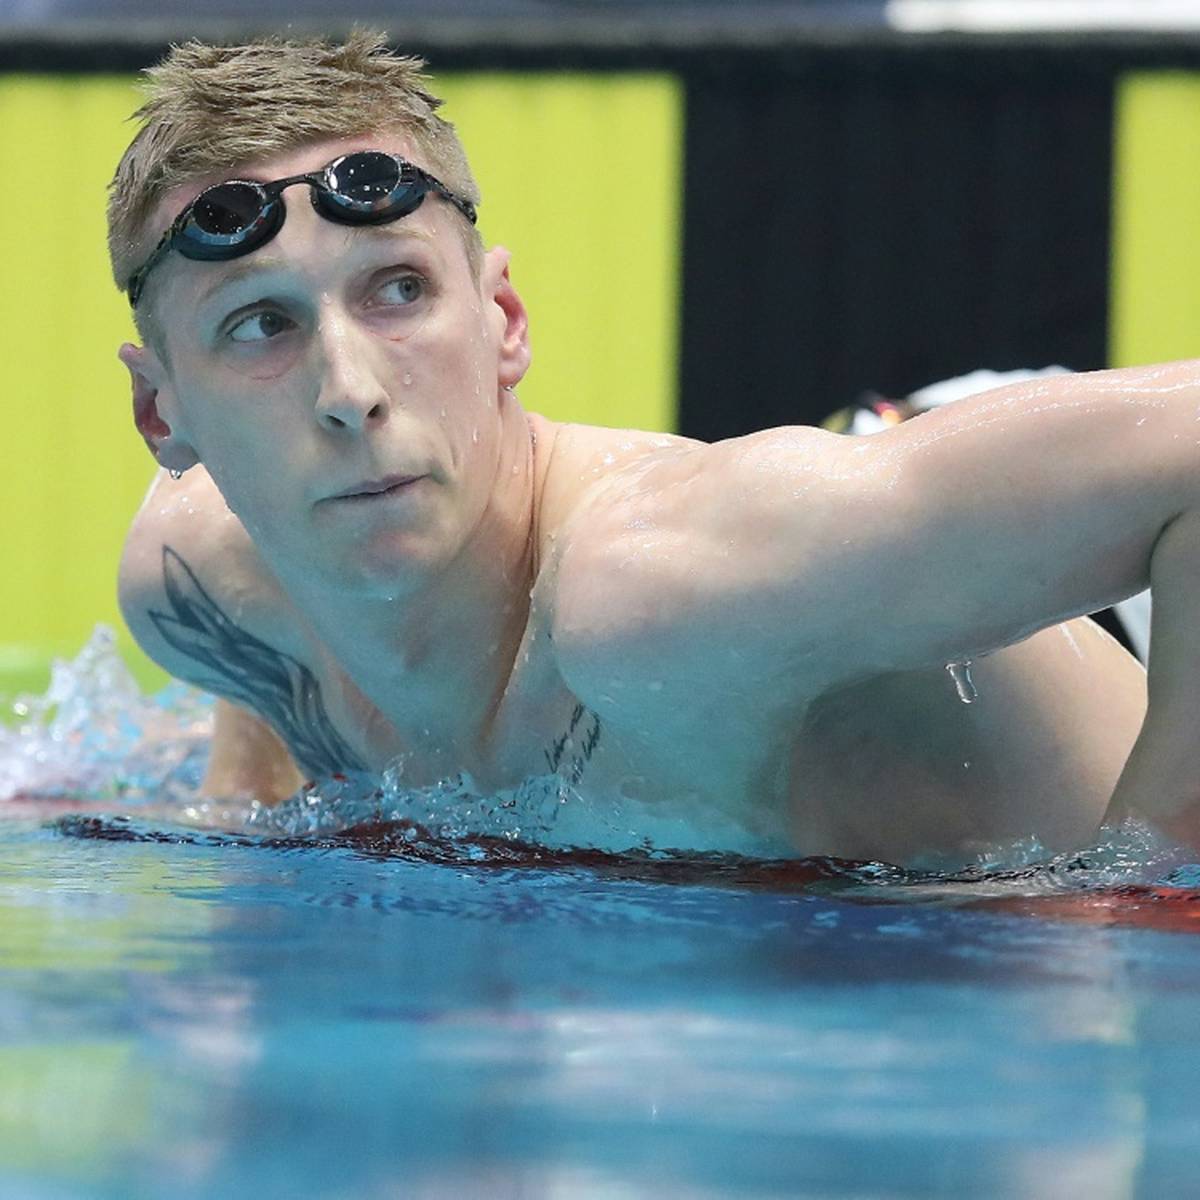 Schwimm-Olympiasieger Florian Wellbrock ist zum "Sportler des Monats" Dezember gewählt worden.